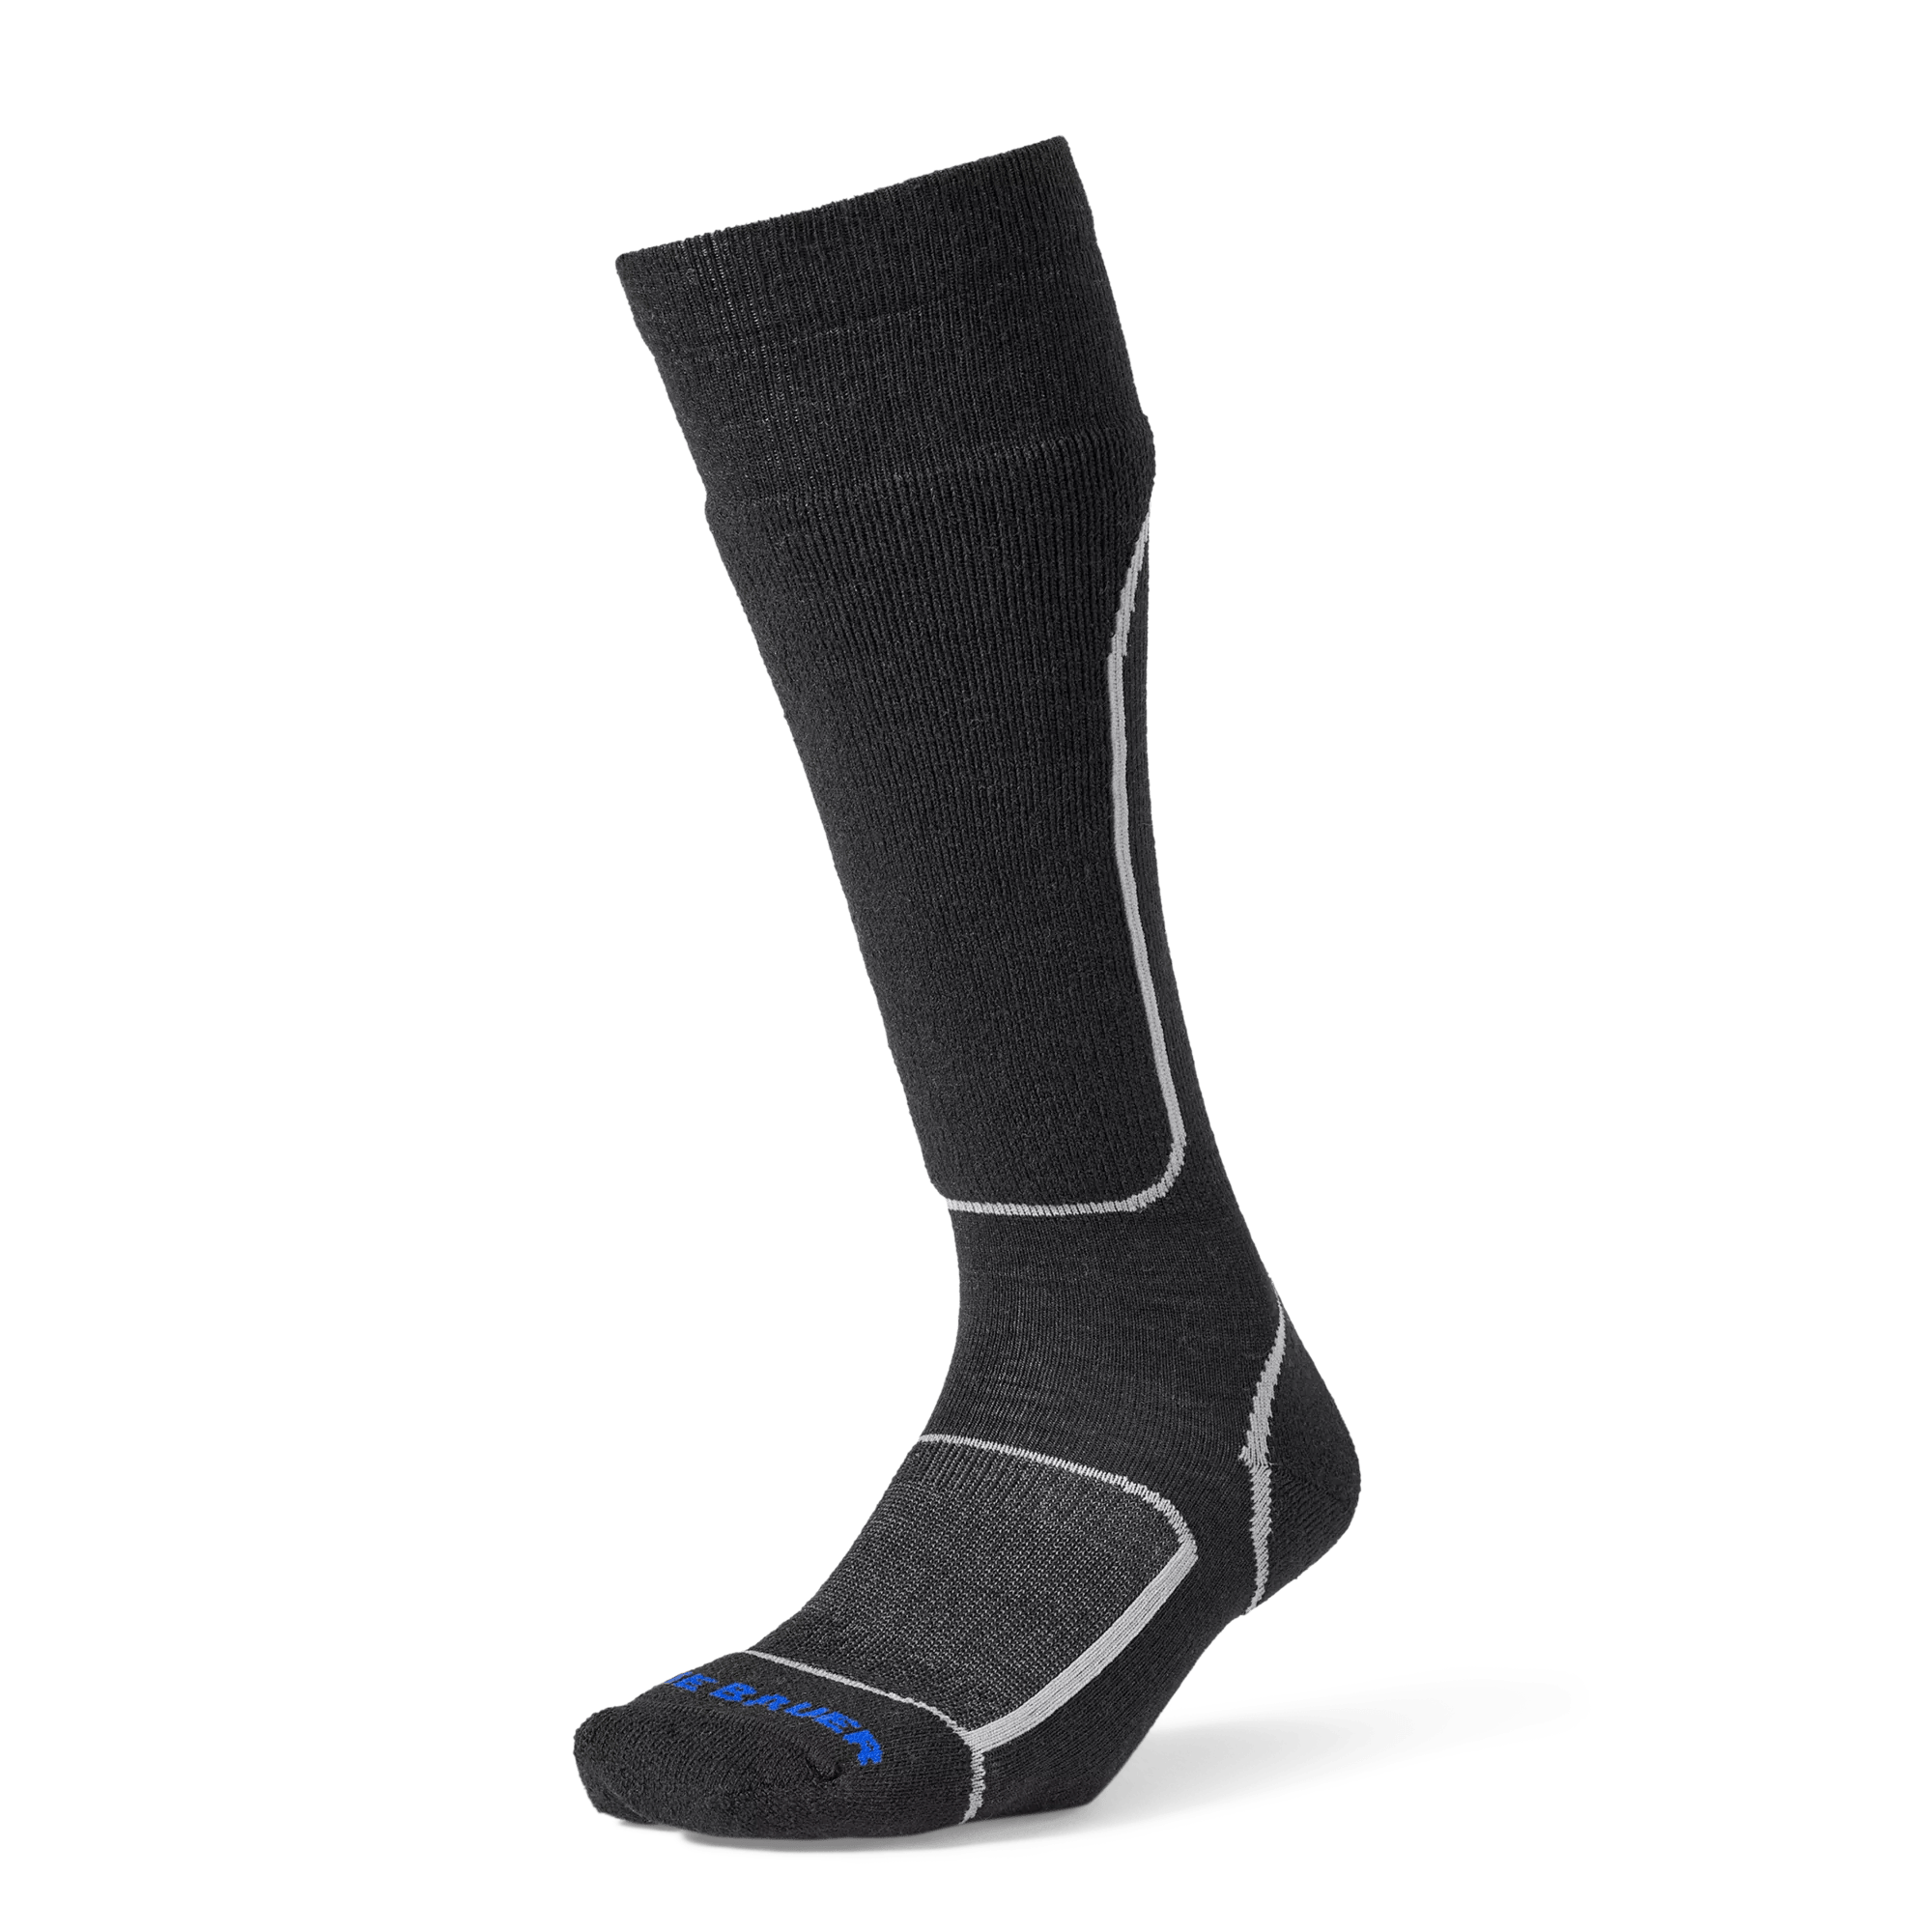 Guide Pro Merino Wool Ski Socks